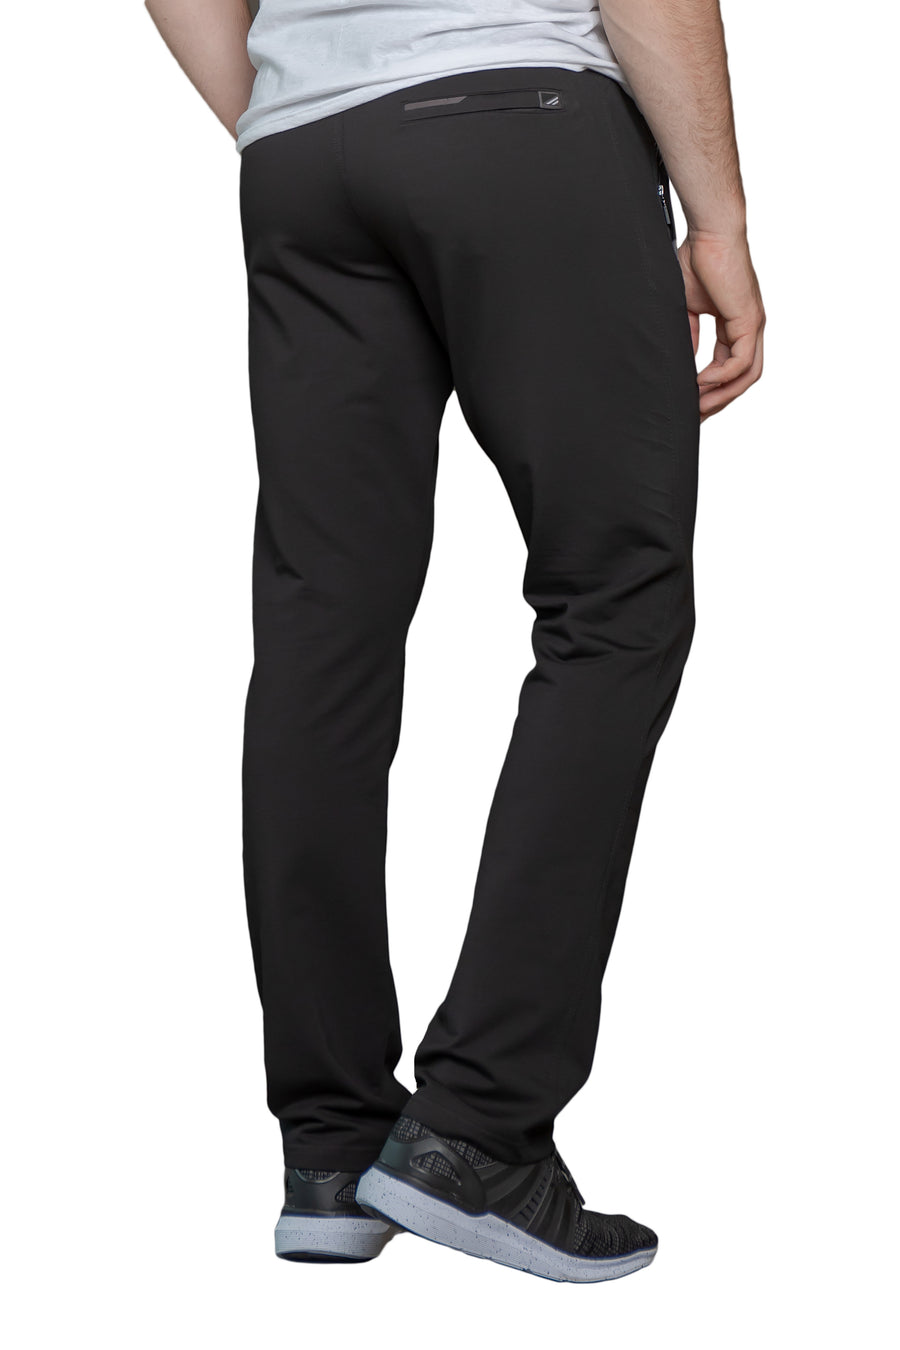  SCR SPORTSWEAR All-Day Comfort Ultimate Flex Men's Sweatpants  Training Pants Men's Casual Pants Tall Long 30/33/36 Inseam (2XL/34,  MDB/G-K916) : Clothing, Shoes & Jewelry